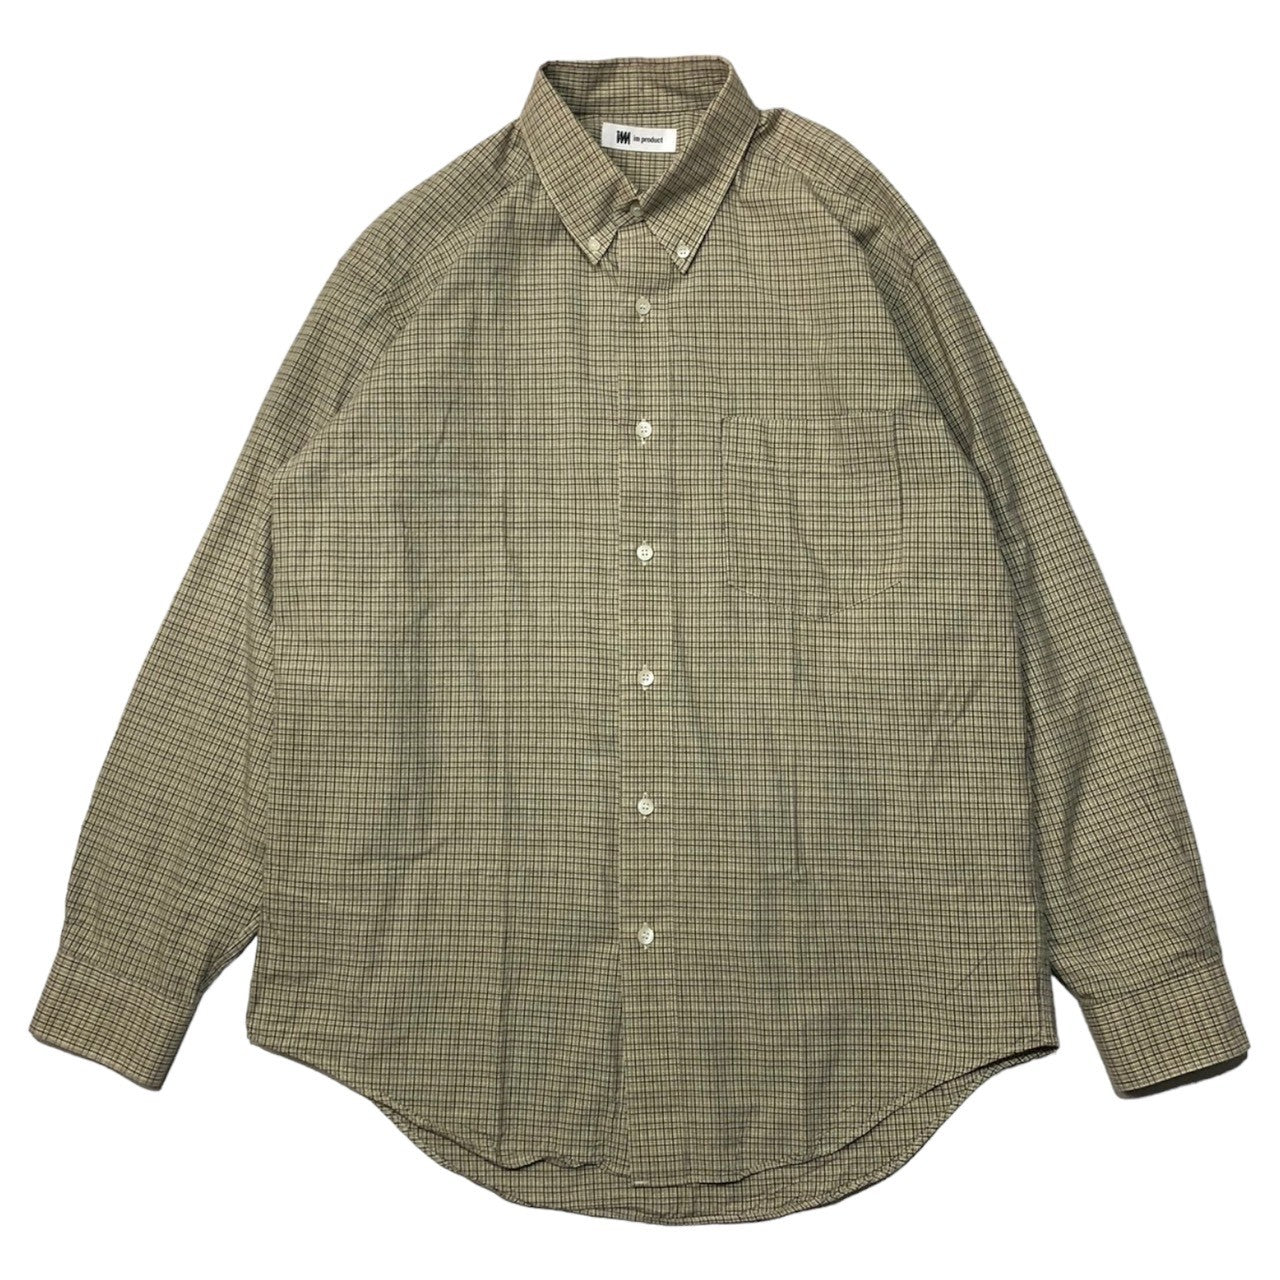 issey miyake im product(イッセイミヤケ アイムプロダクト) 90's Detailed check button down shirt チェック ボタンダウン シャツ 90年代 IMMD-TA4324 SIZE表記無し ベージュ